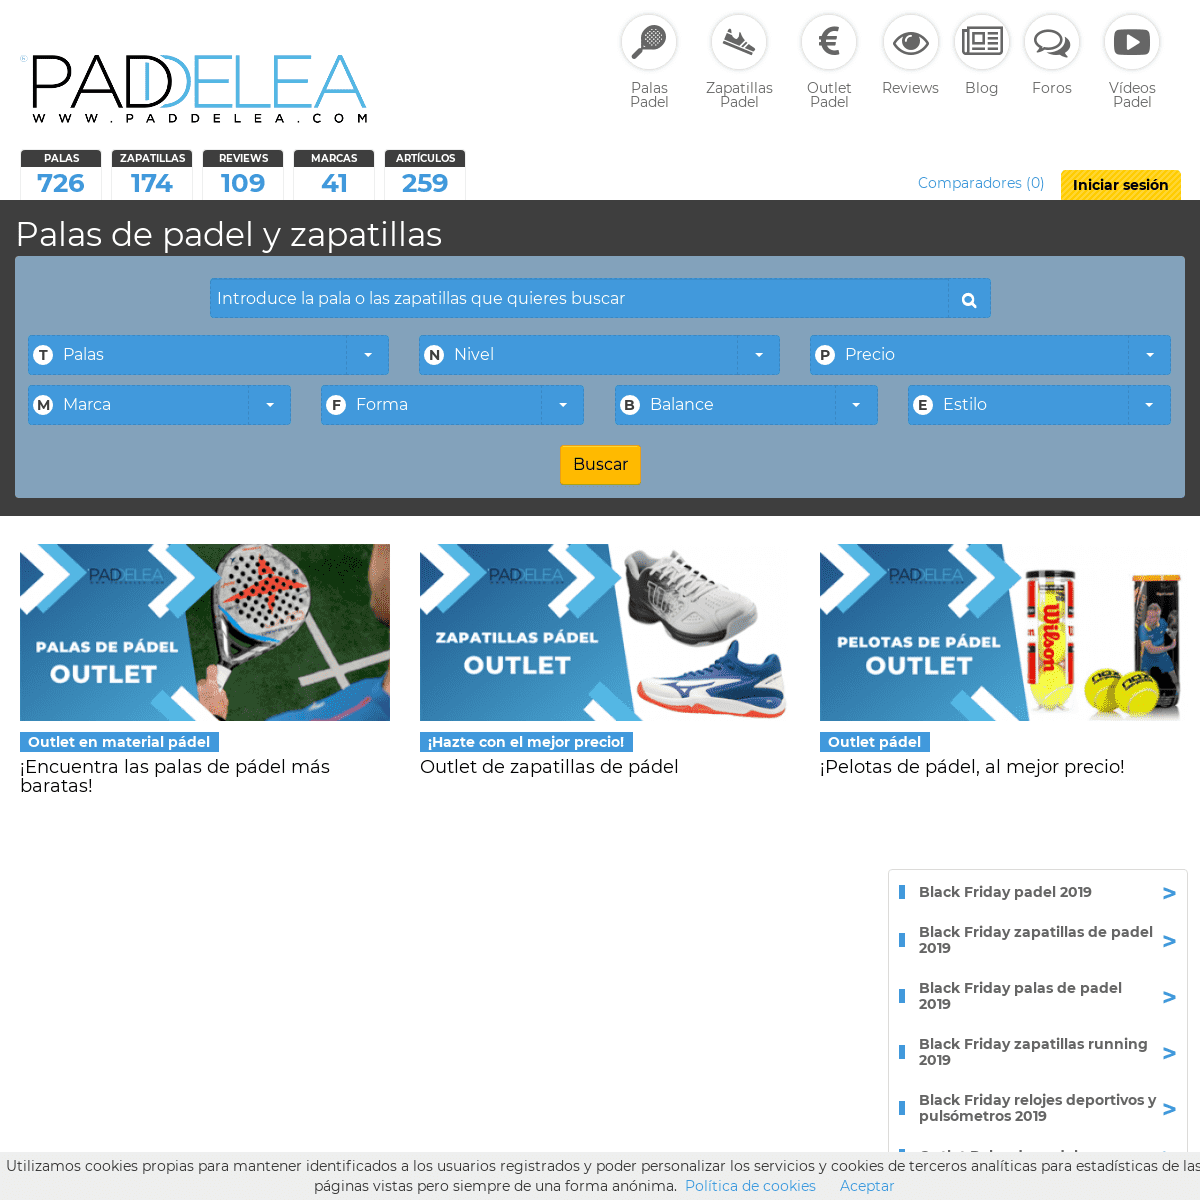 A complete backup of paddelea.com